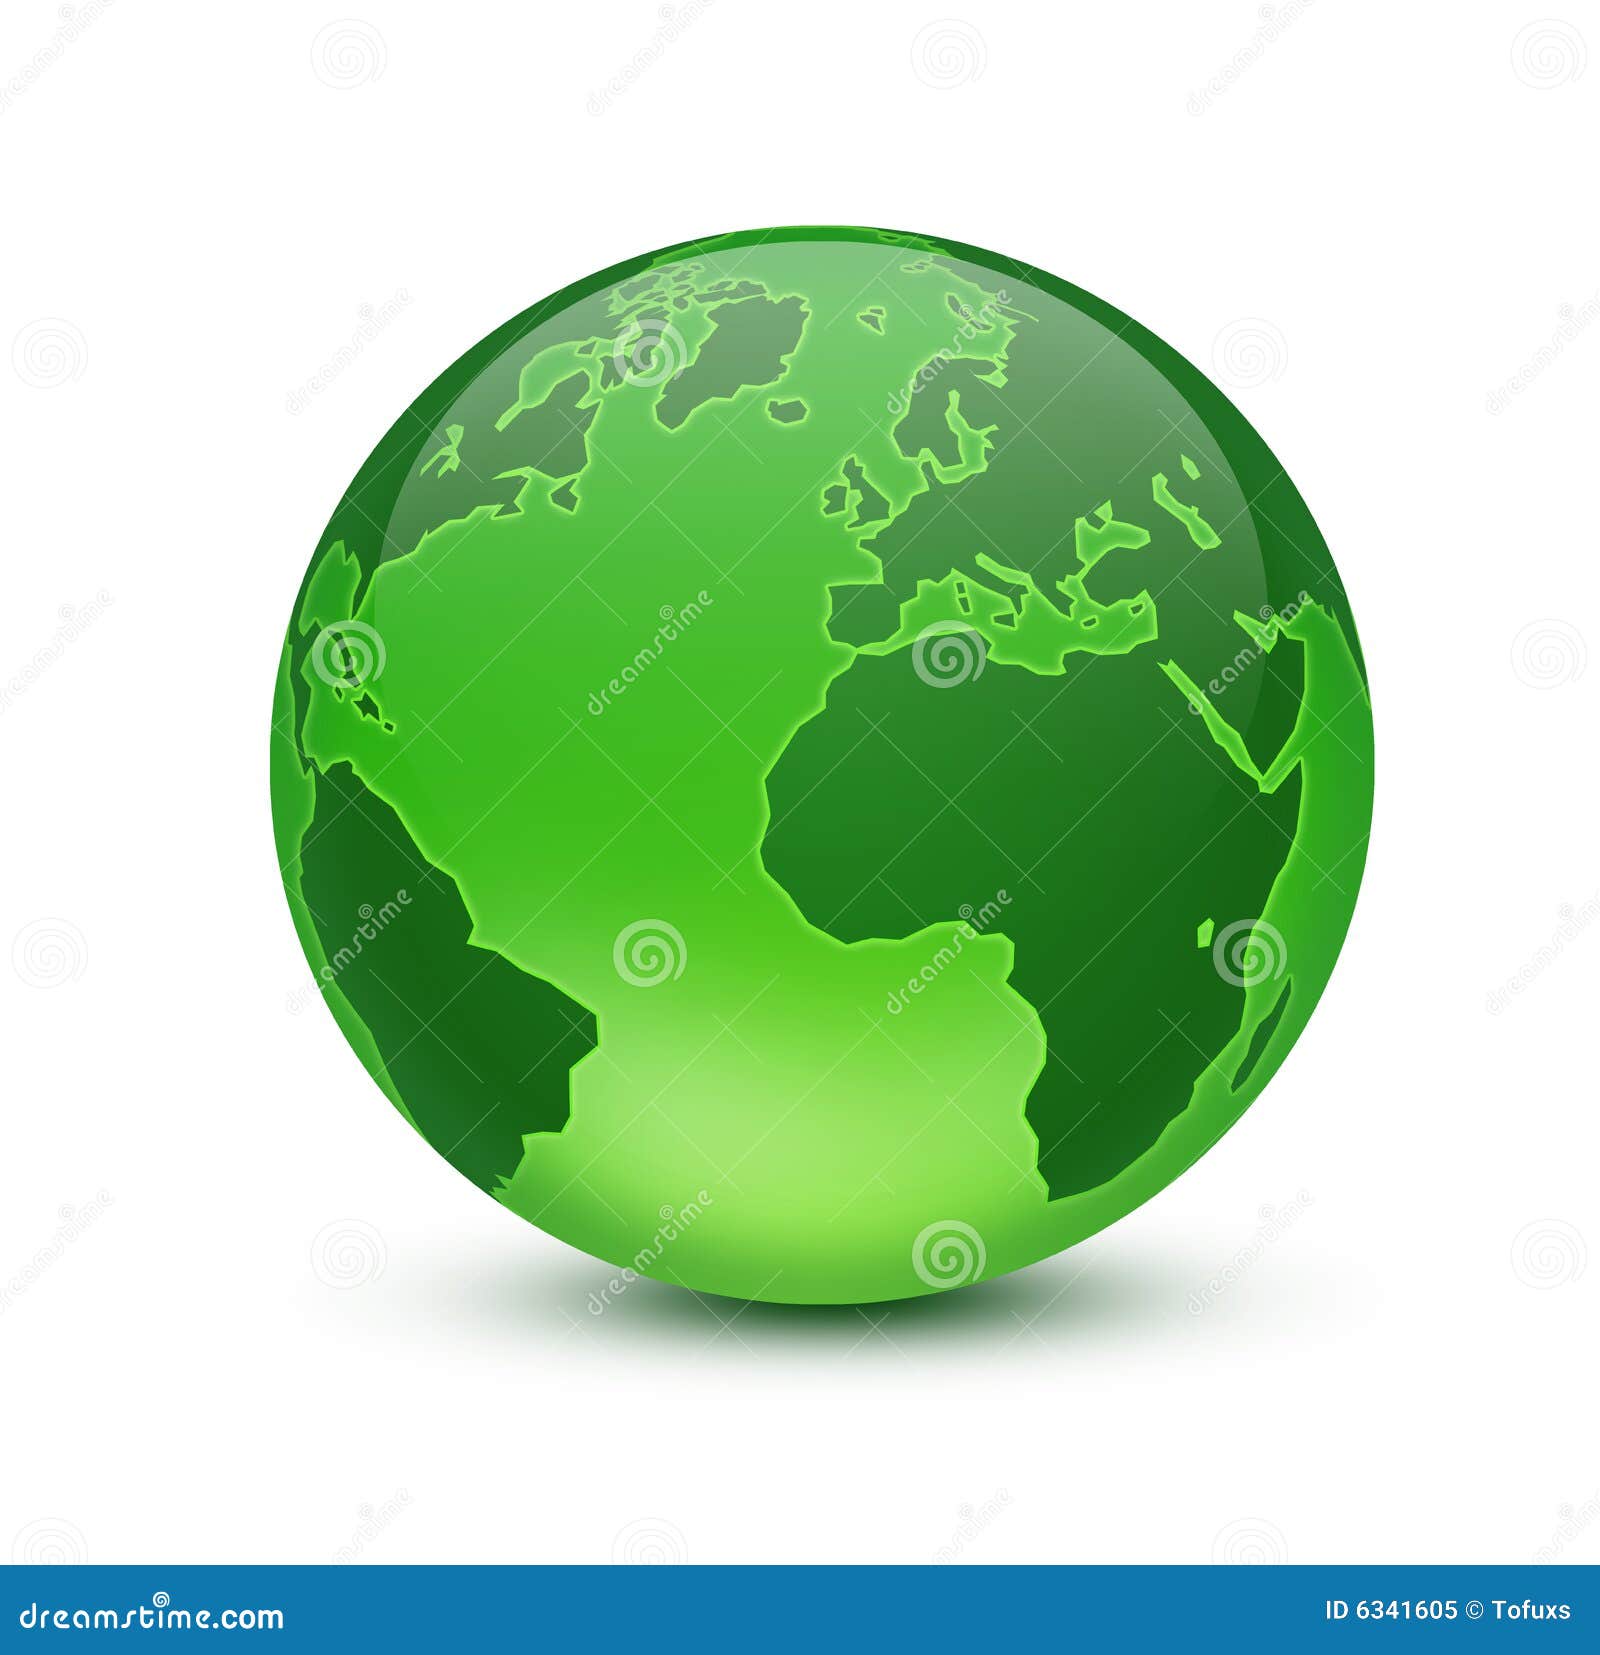 green globe clipart - photo #47